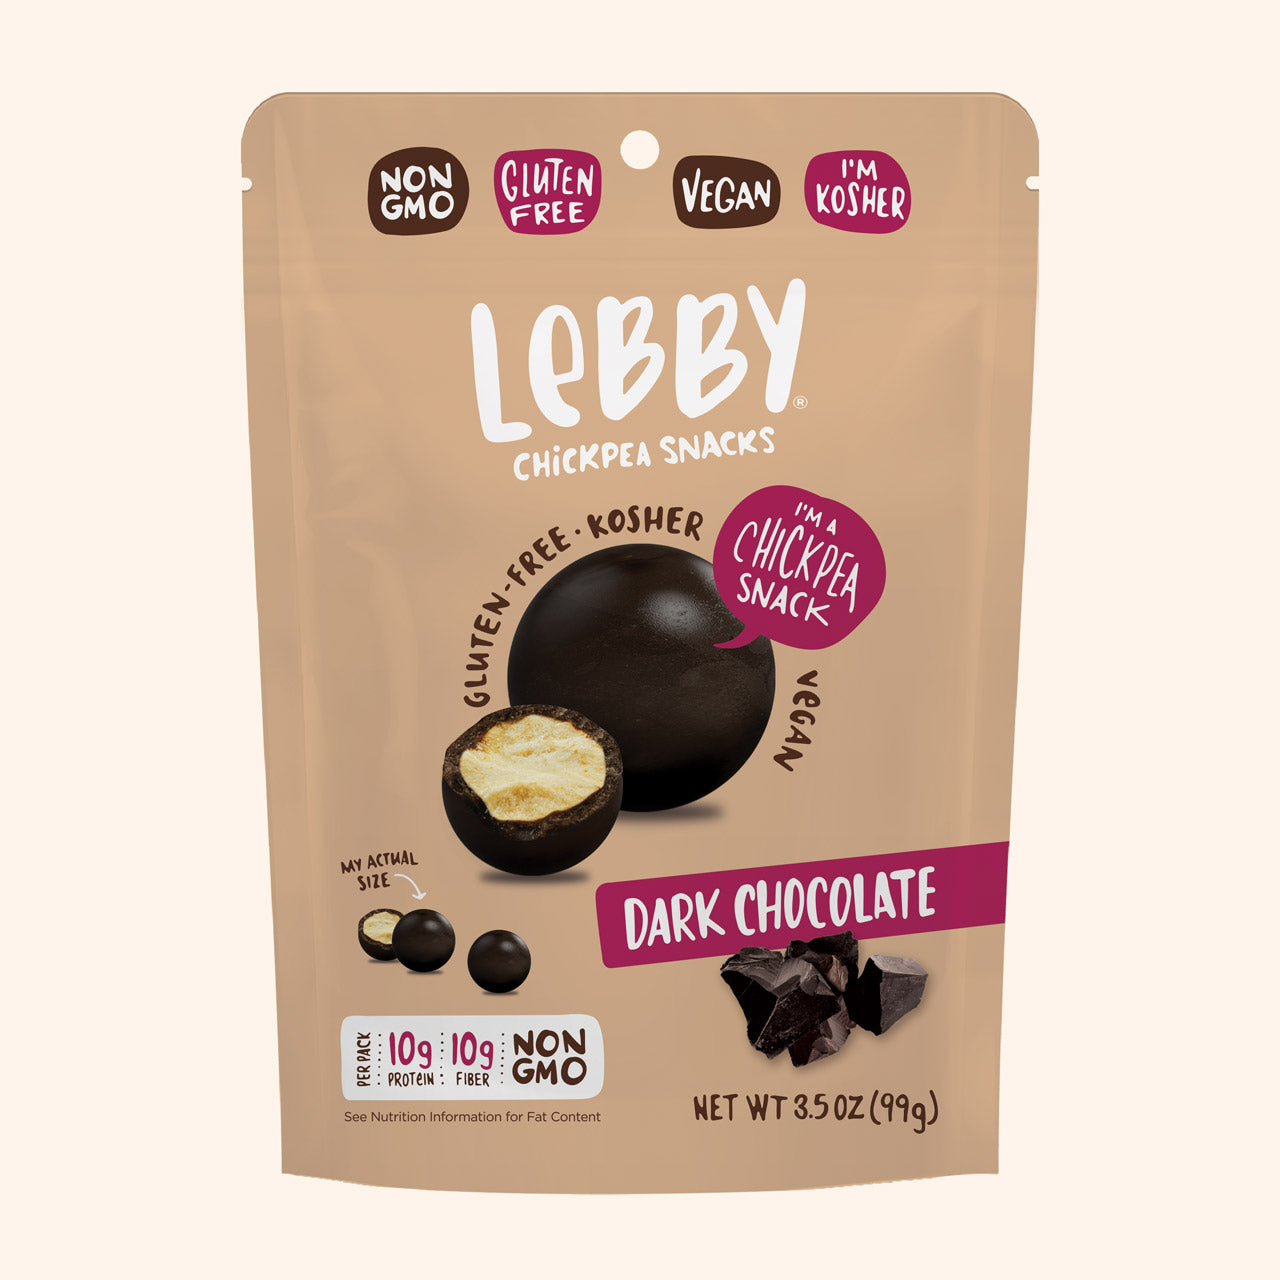 Dry Roasted Chickpeas Dark Chocolate by Lebby, 99g